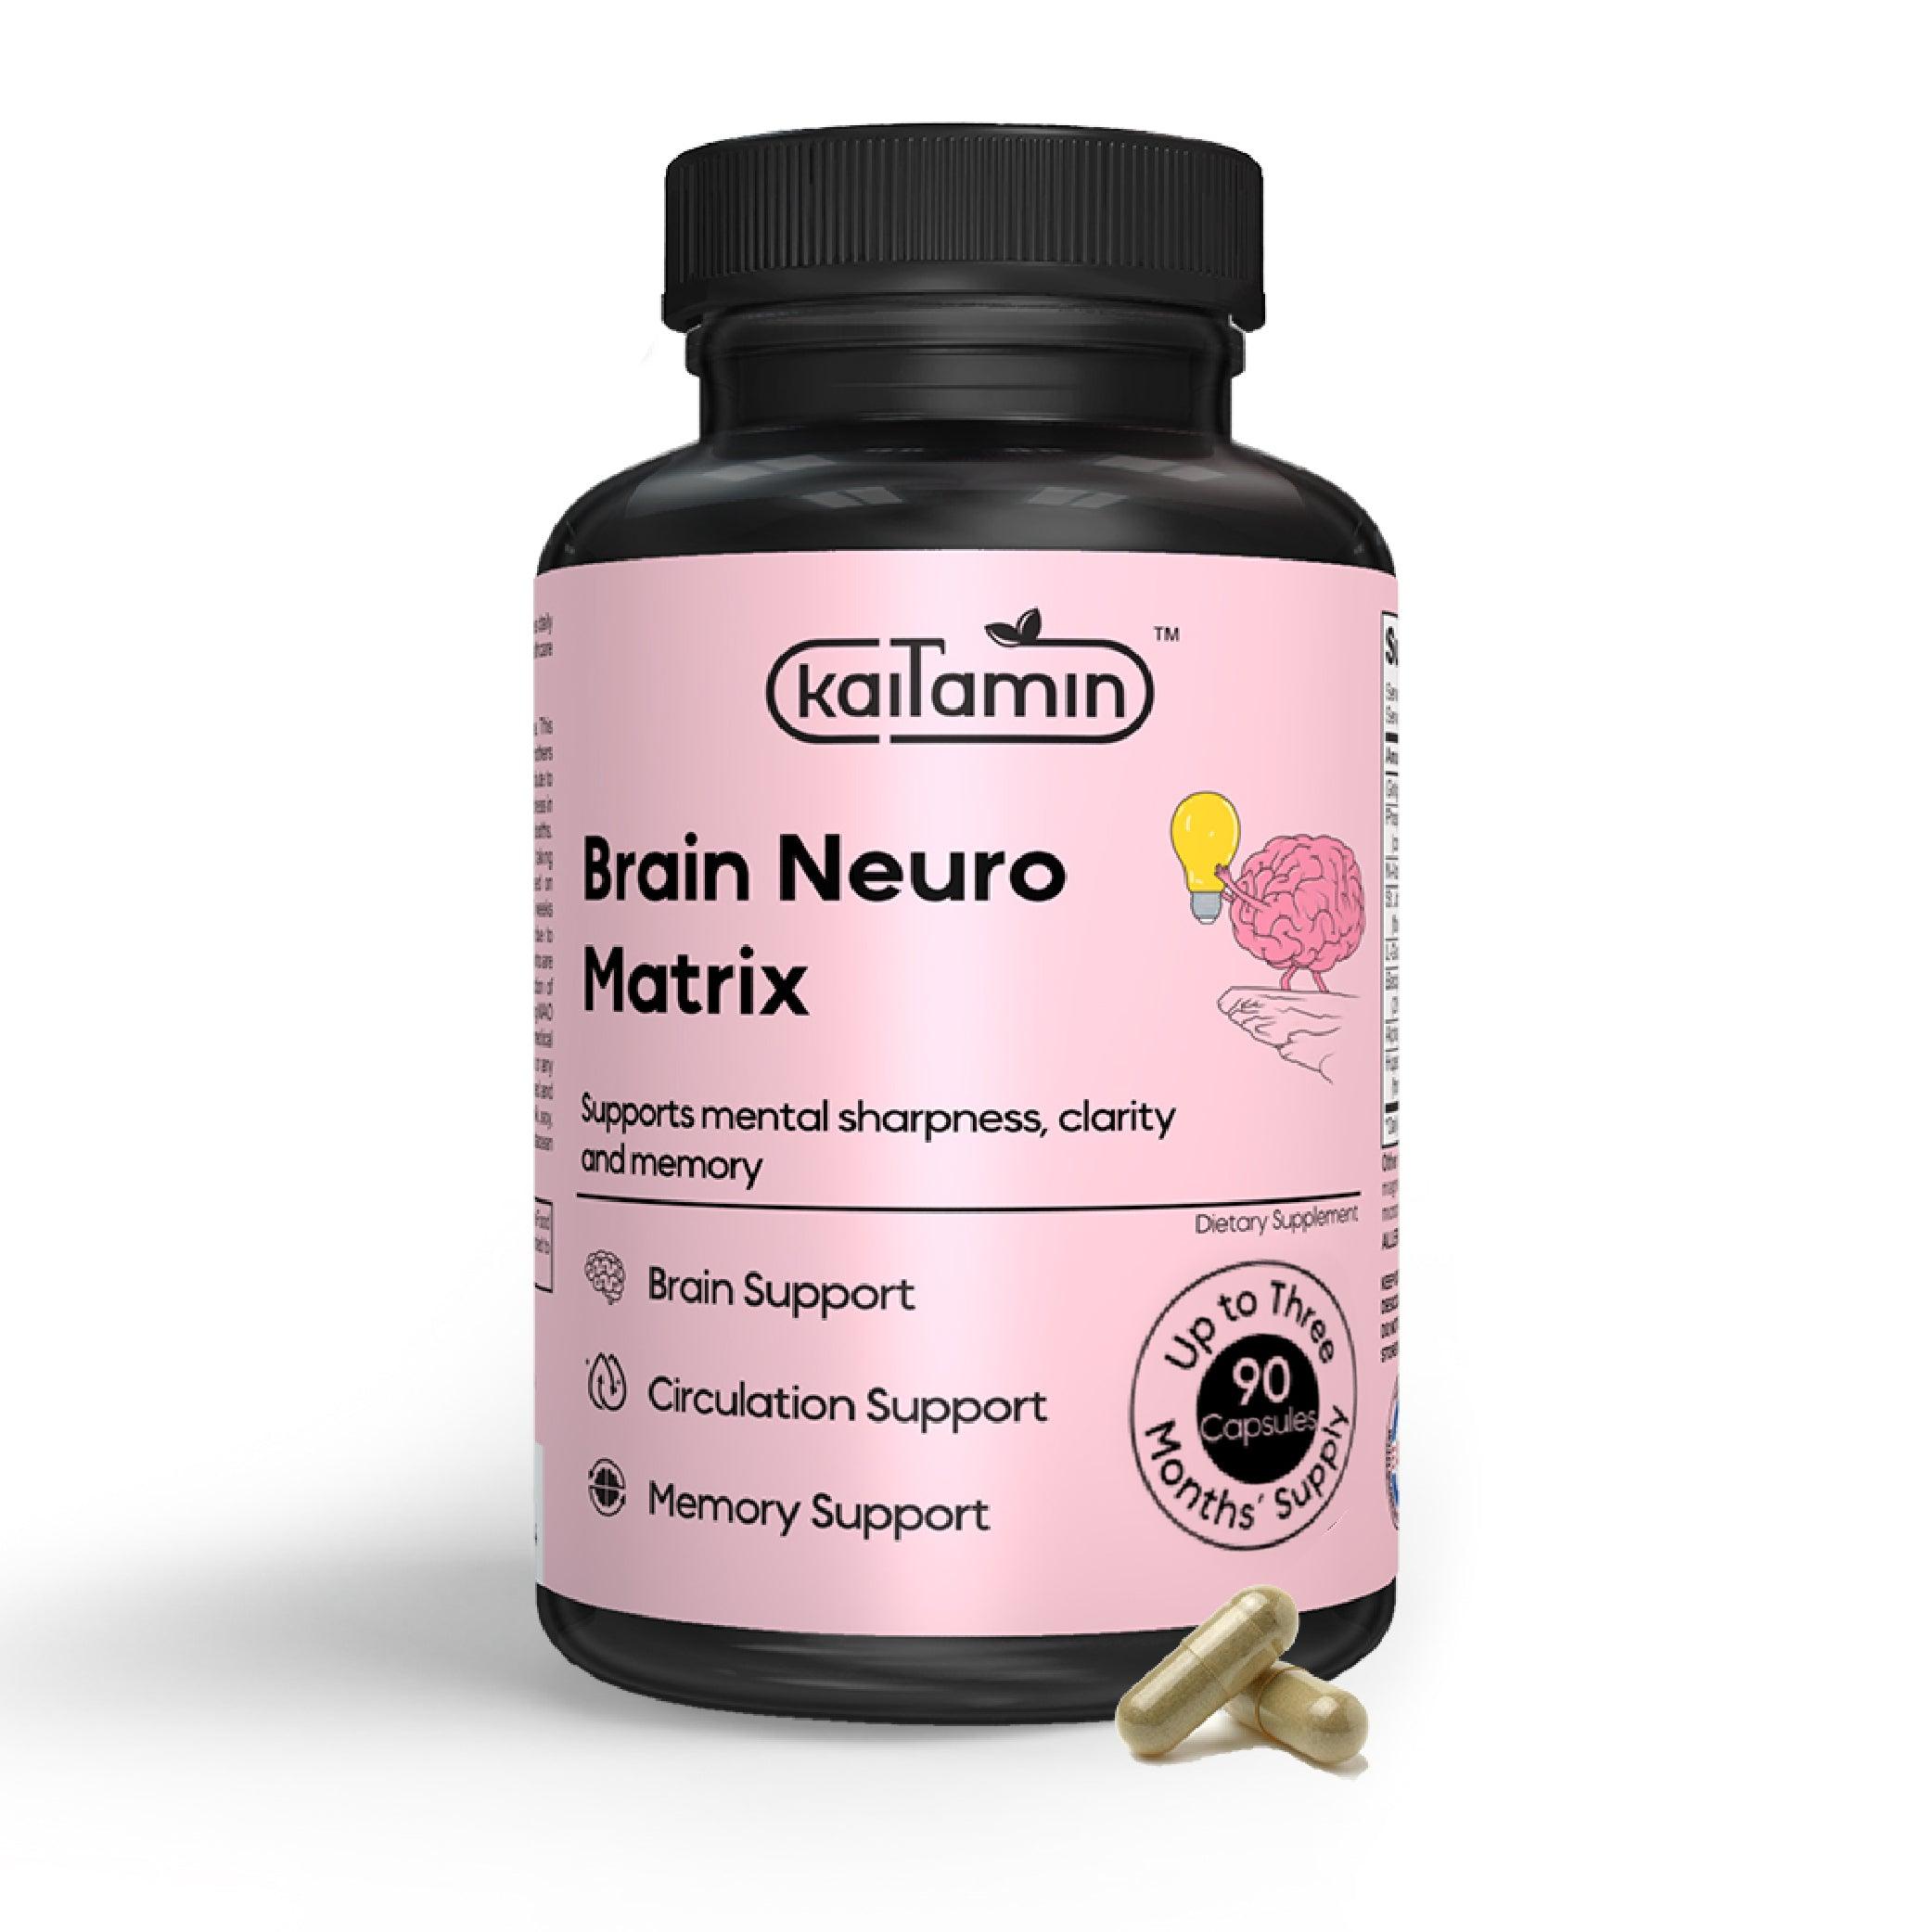 Brain Neuro Matrix - Memory, Focus, Studying Support -90 Tablets - Kaitamin